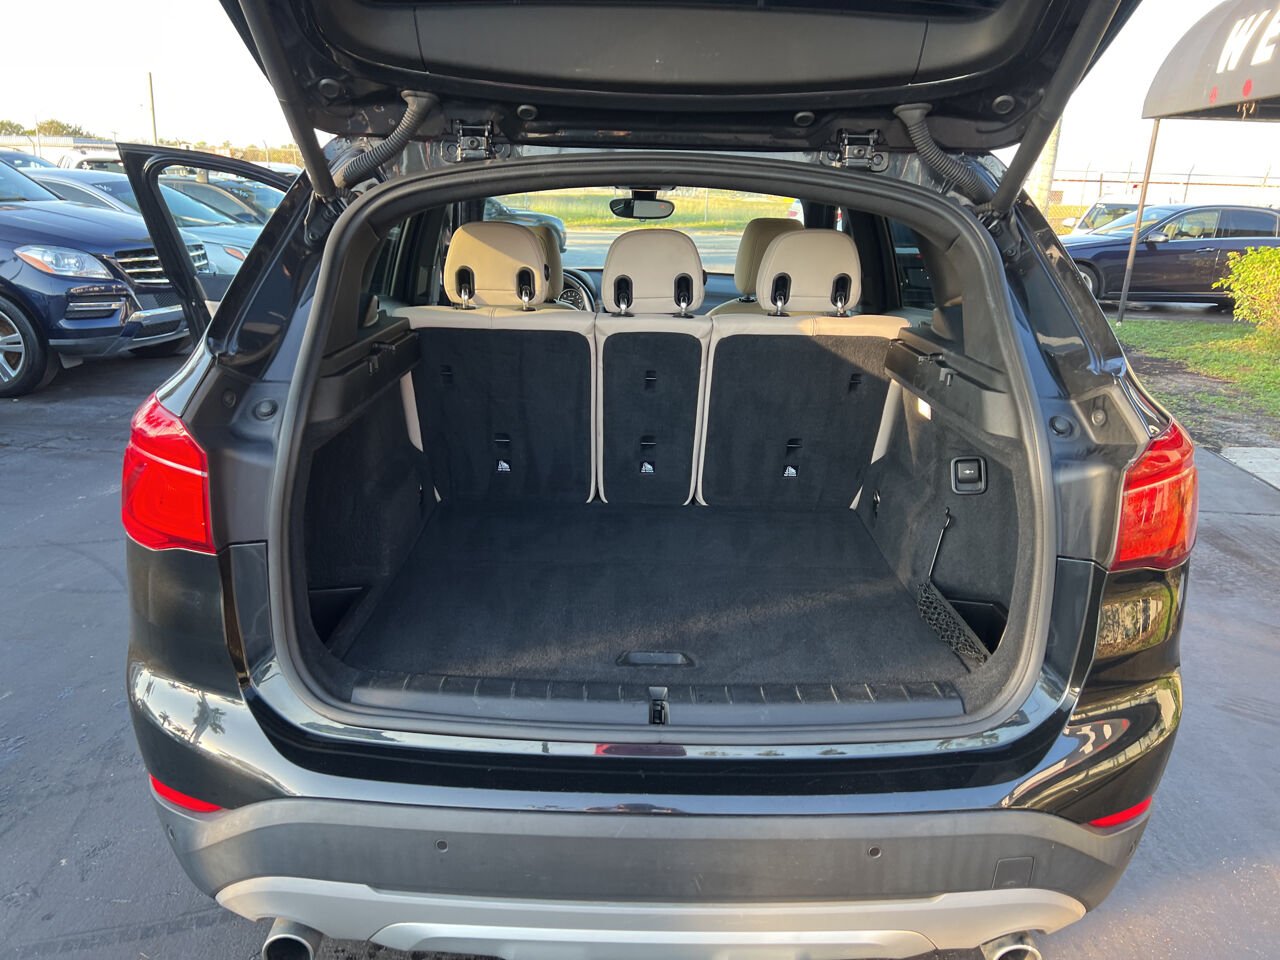 2016 BMW X1 SUV - $17,900